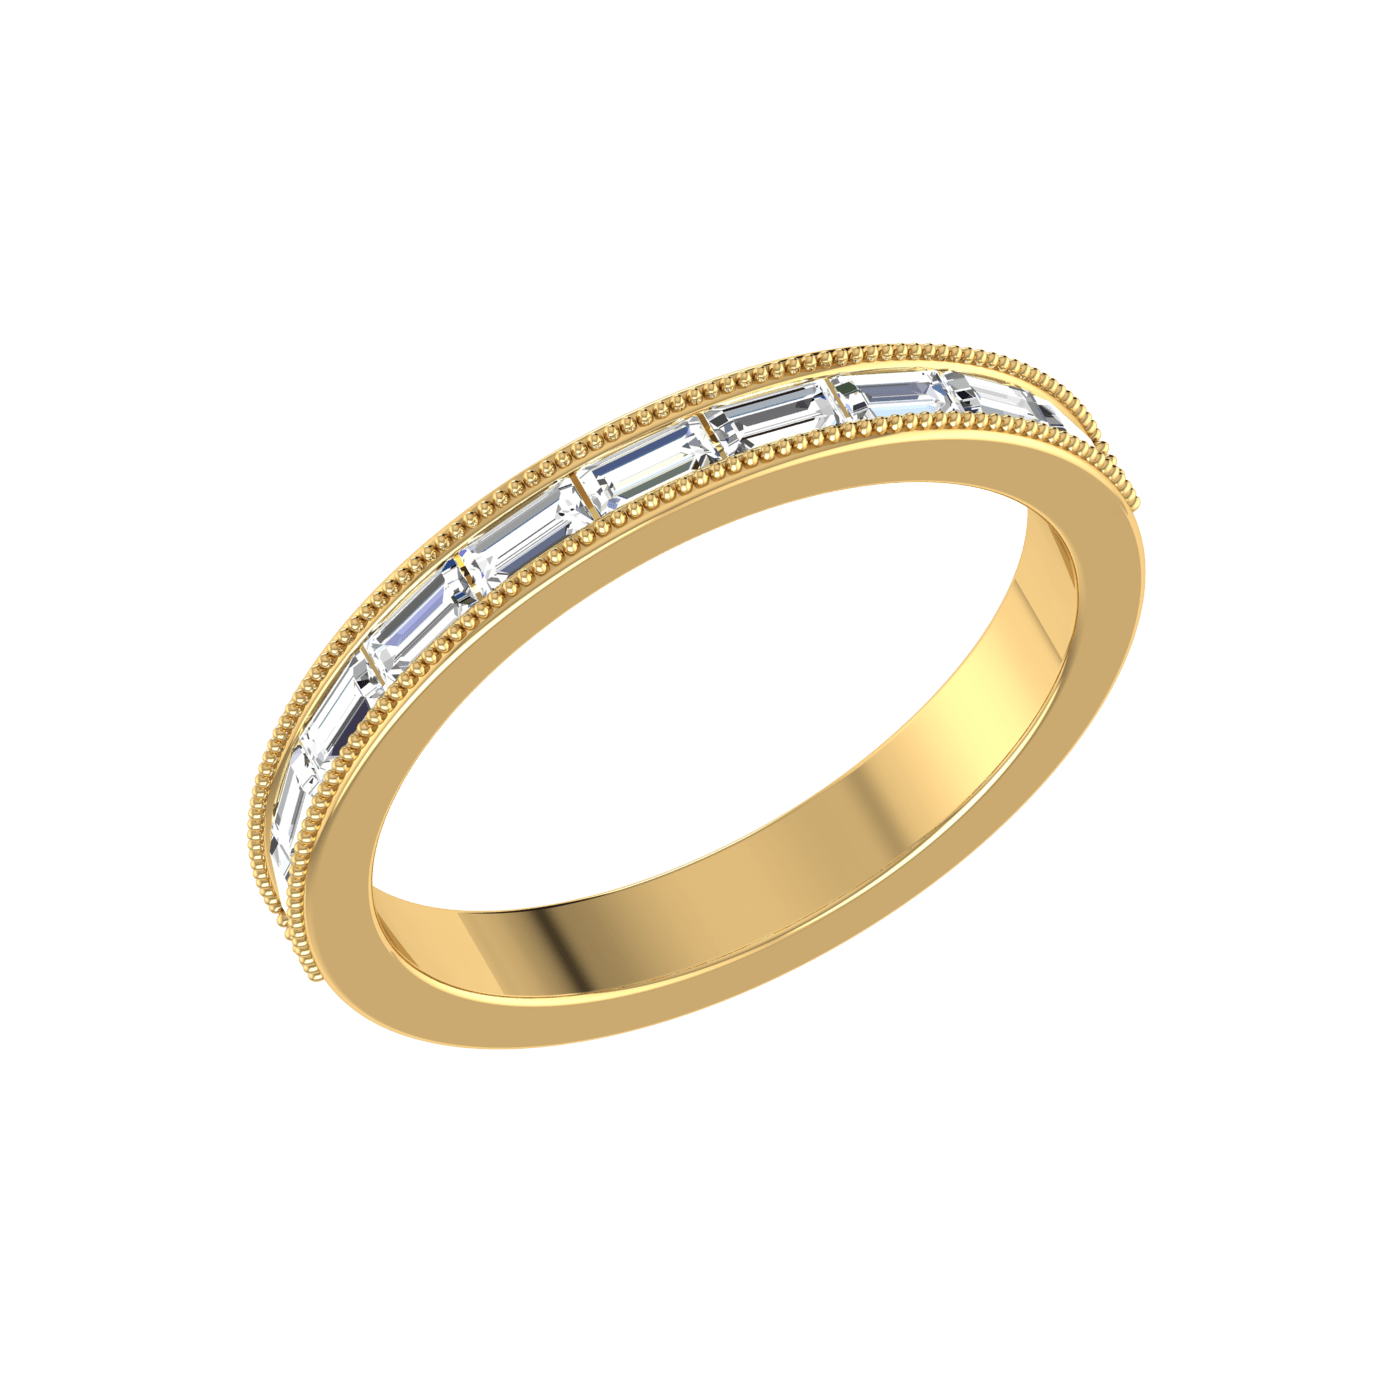 Men's Diamond Wedding Ring 8mm in 14K Gold Size 10